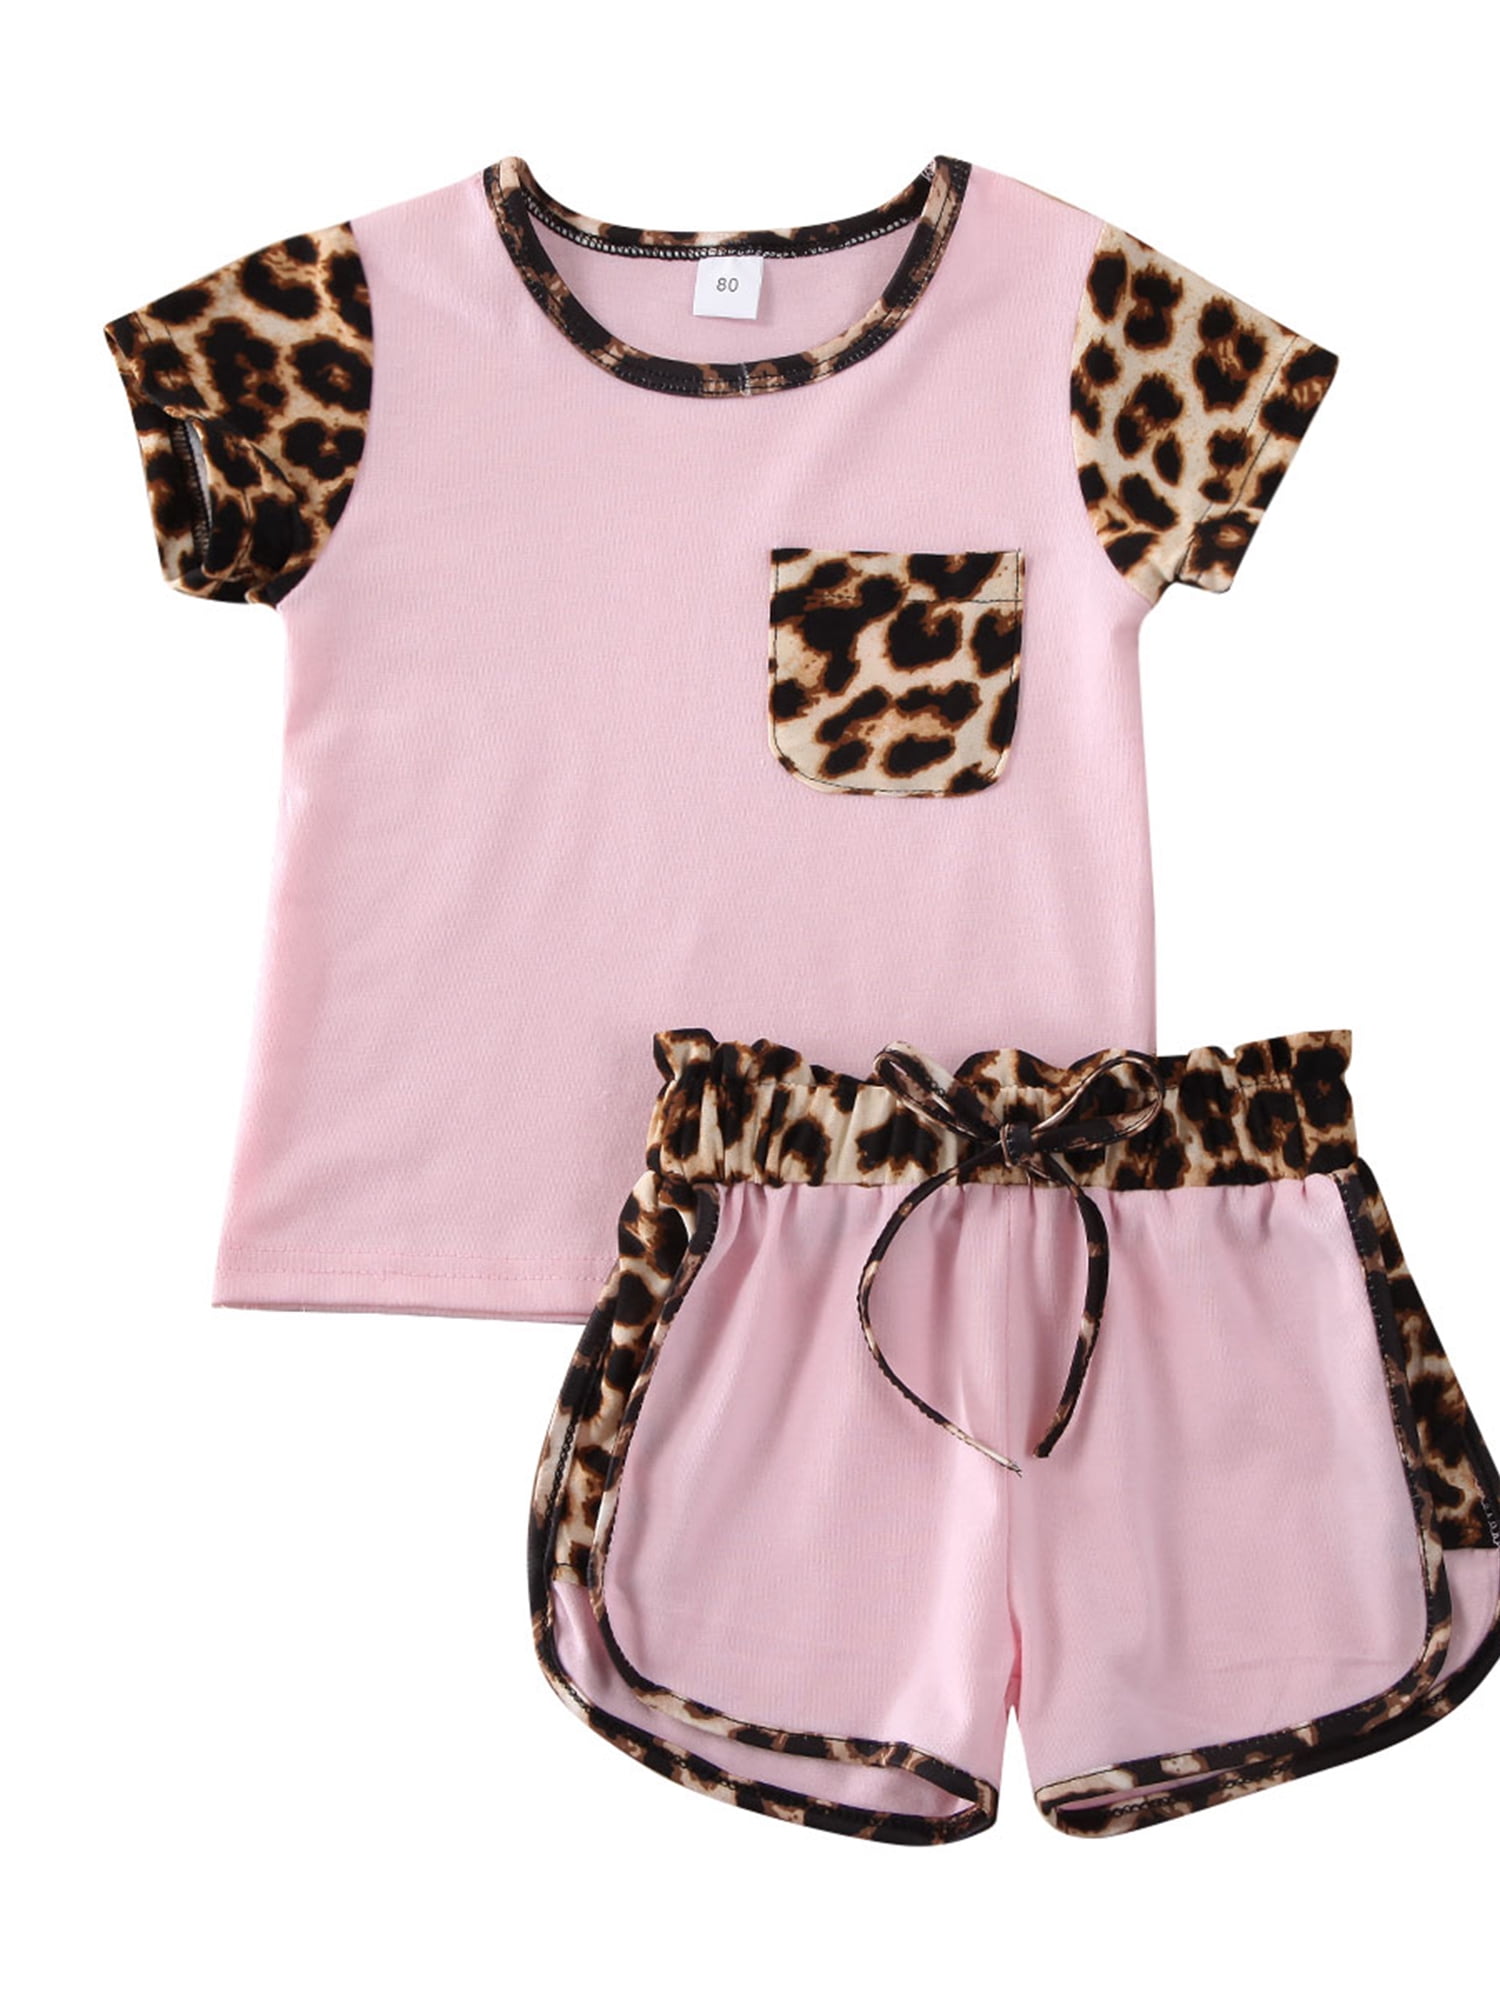 Toddler Baby Girl Summer Outfits Short Sleeve T Shirt Top Leopard ...